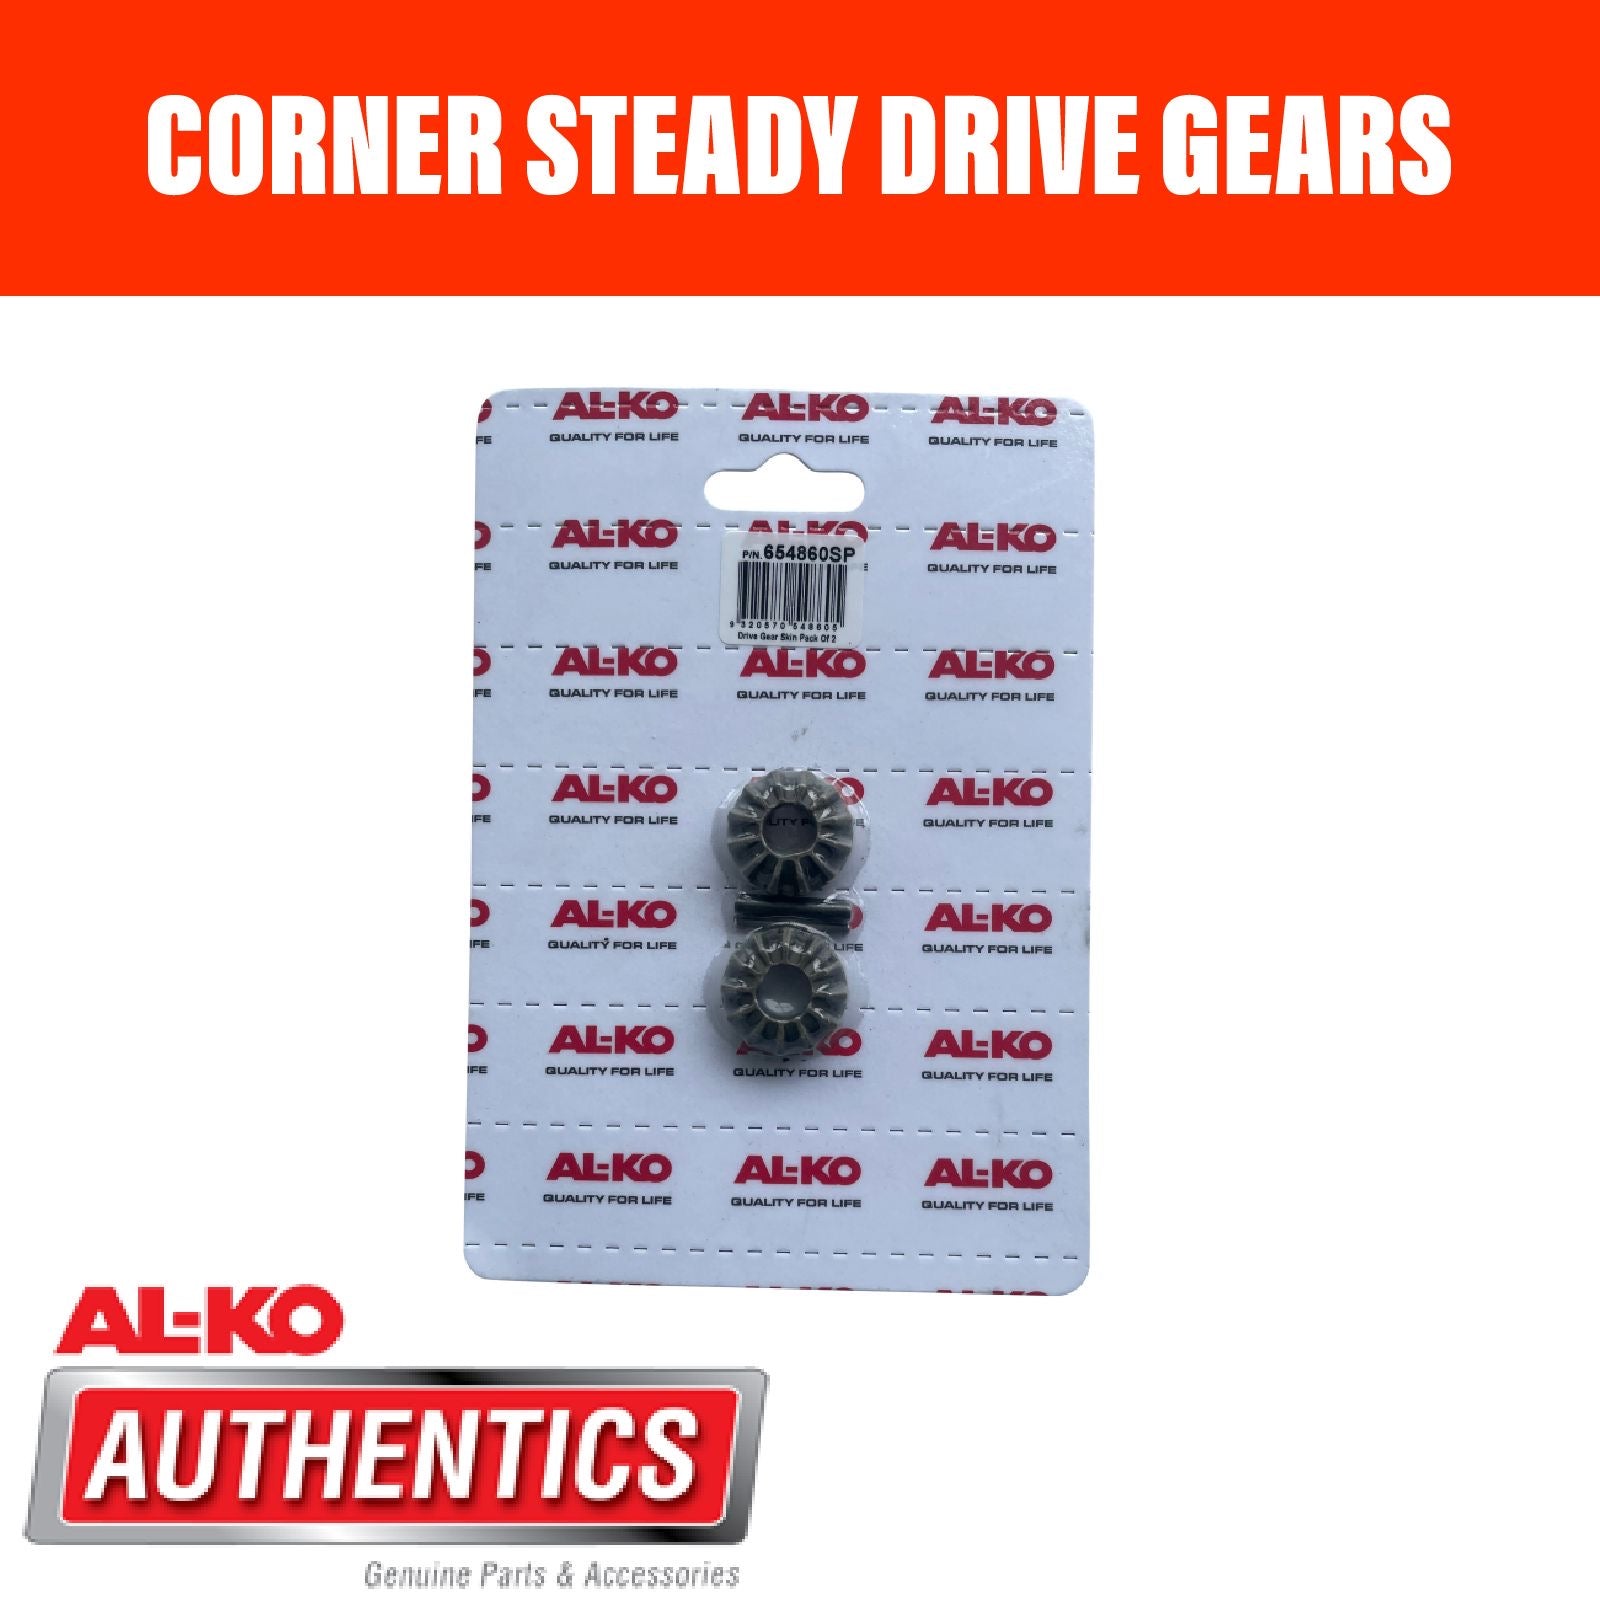 AL-KO Drop Down Corner Steady Drive Gears